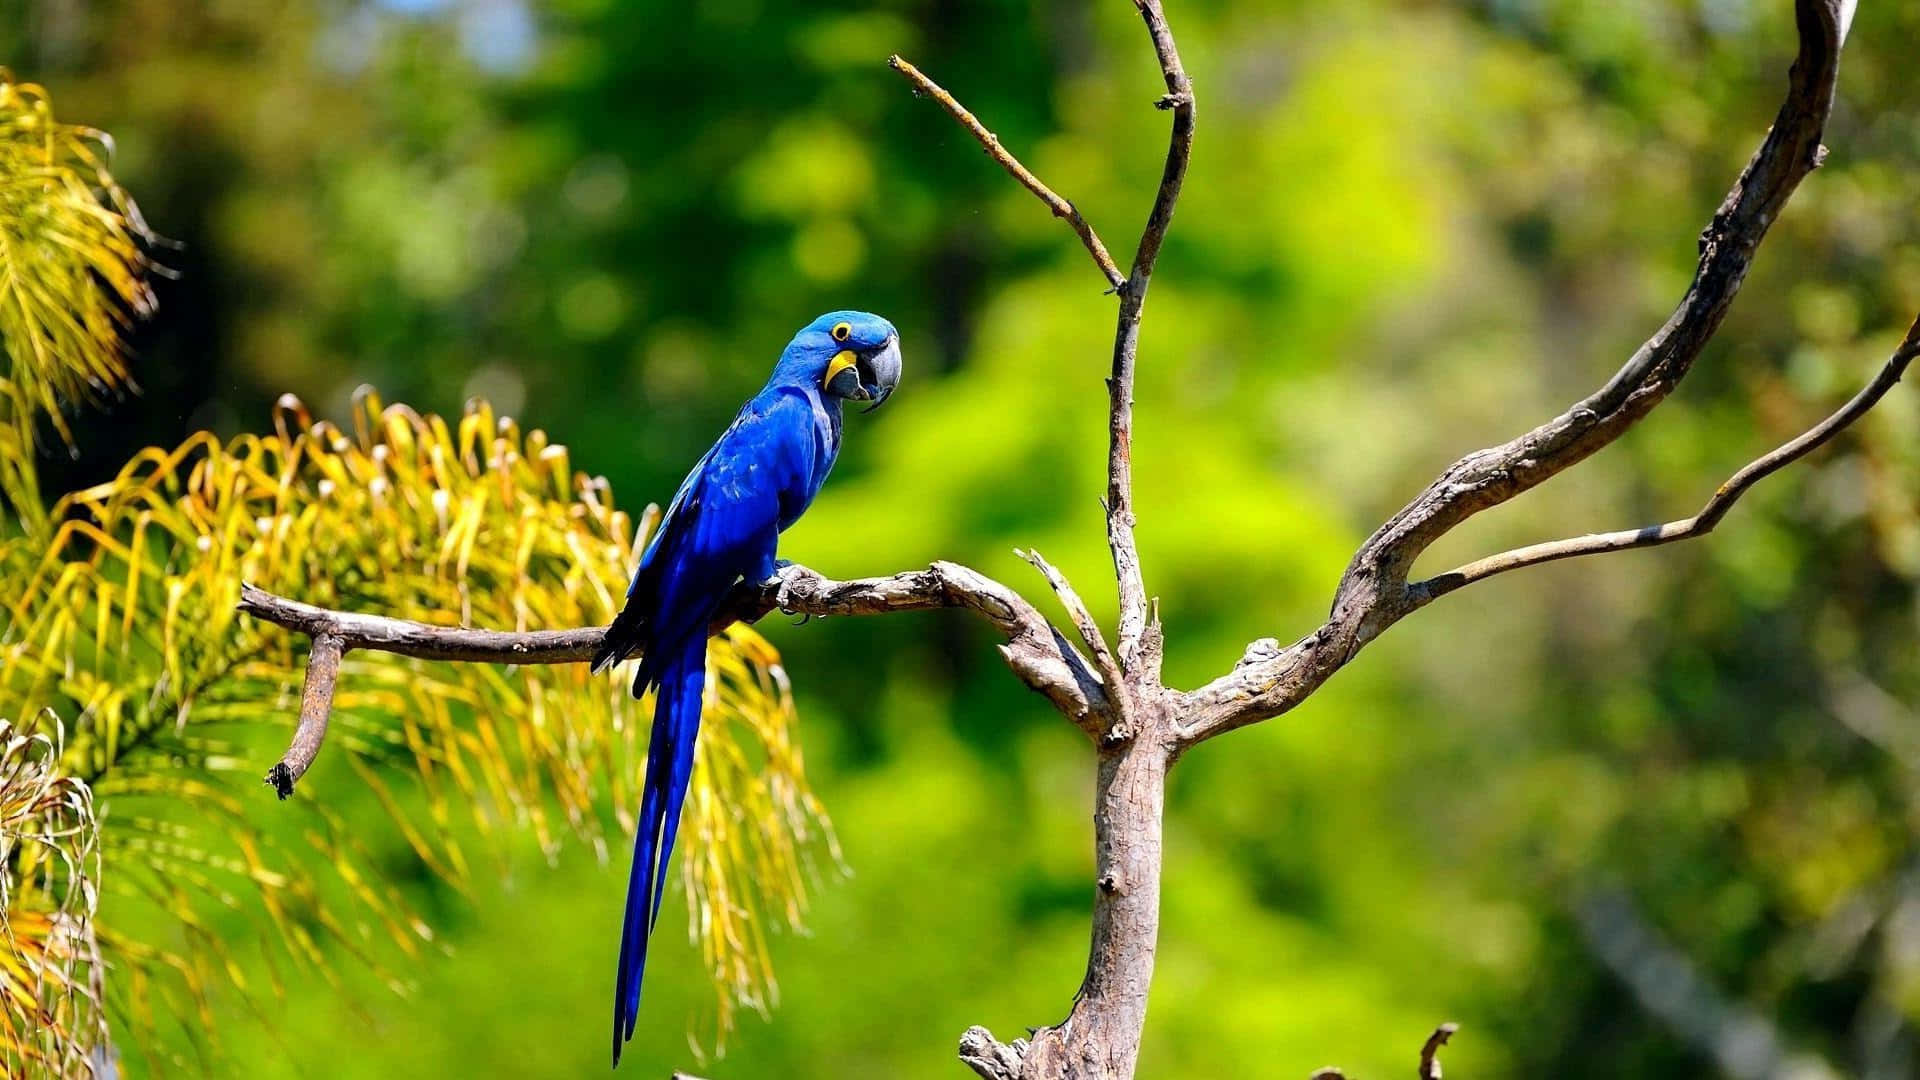 Vibrant Blue Macaw Perchedin Nature.jpg Wallpaper